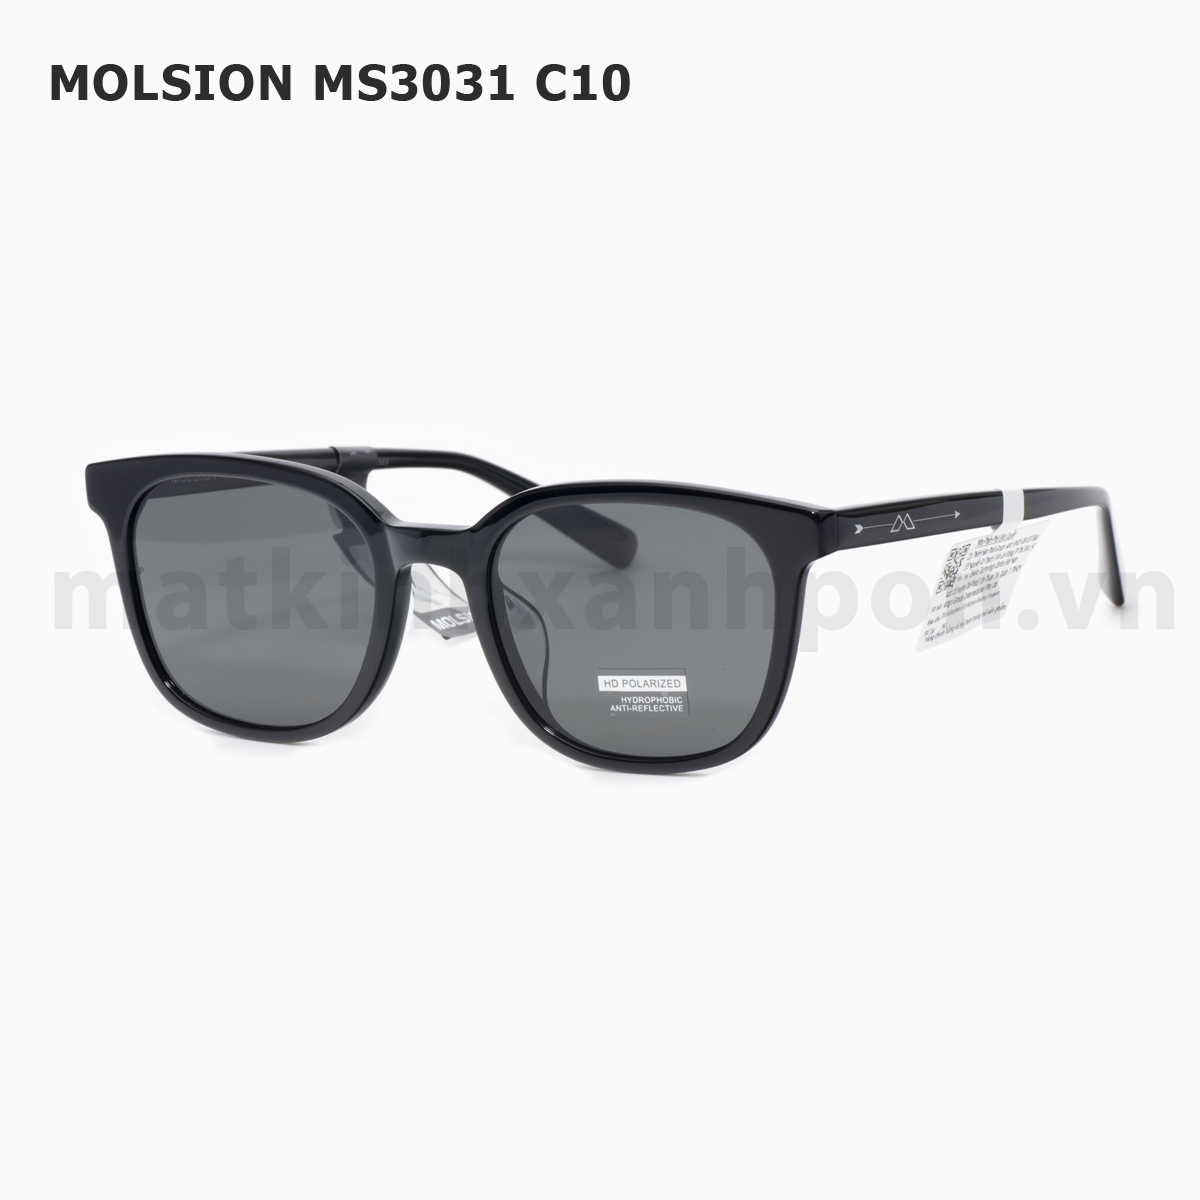 Molsion MS3031 C10